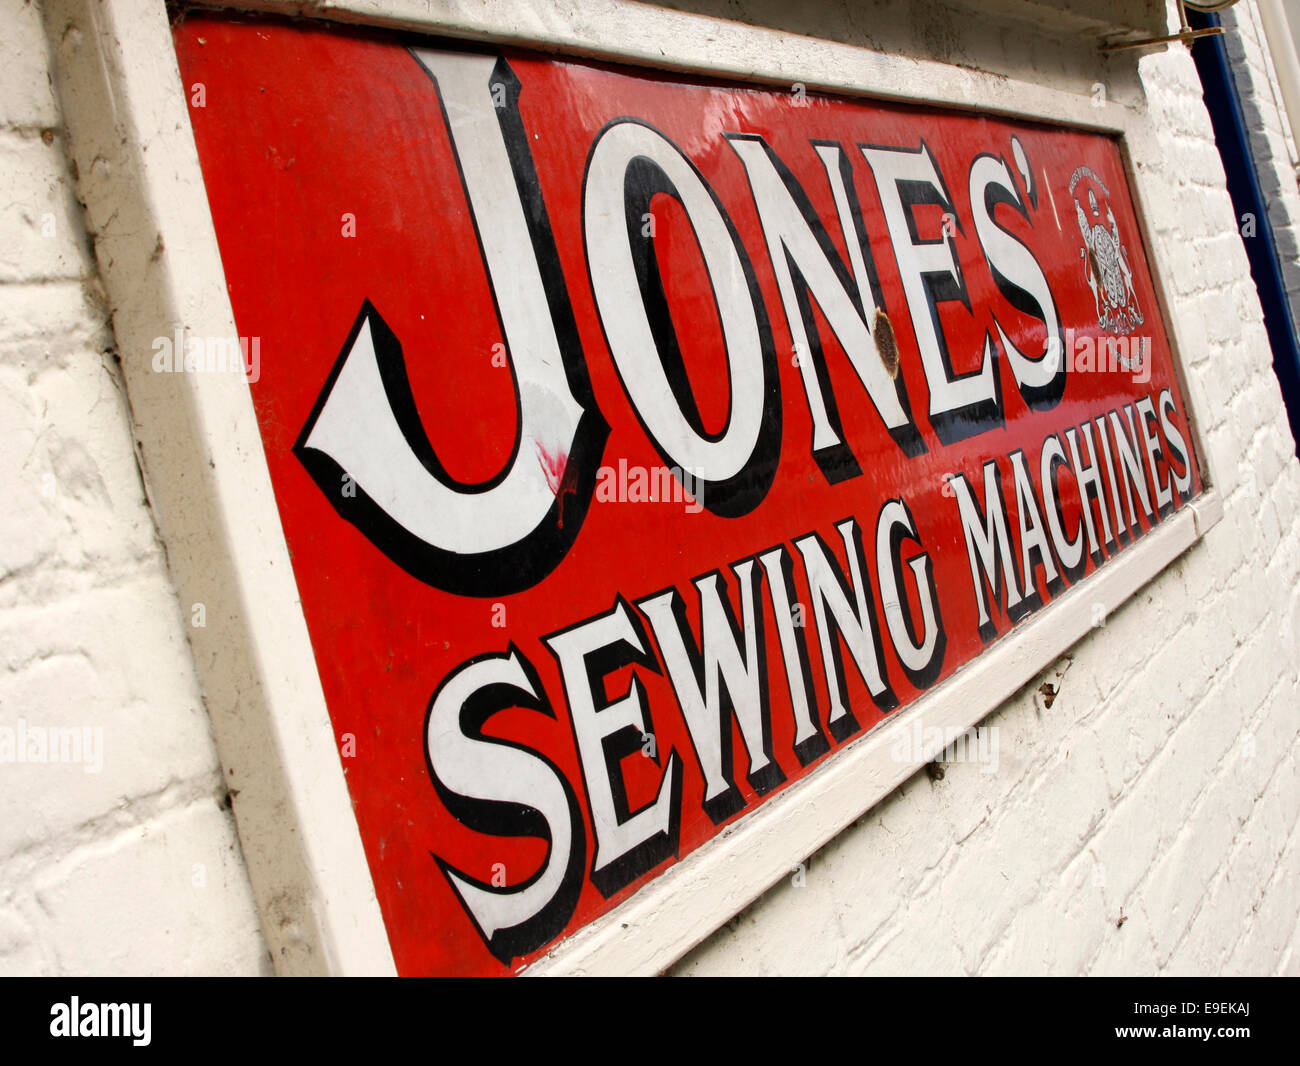 Vintage Jones Sewing Machines advertising sign Stock Photo